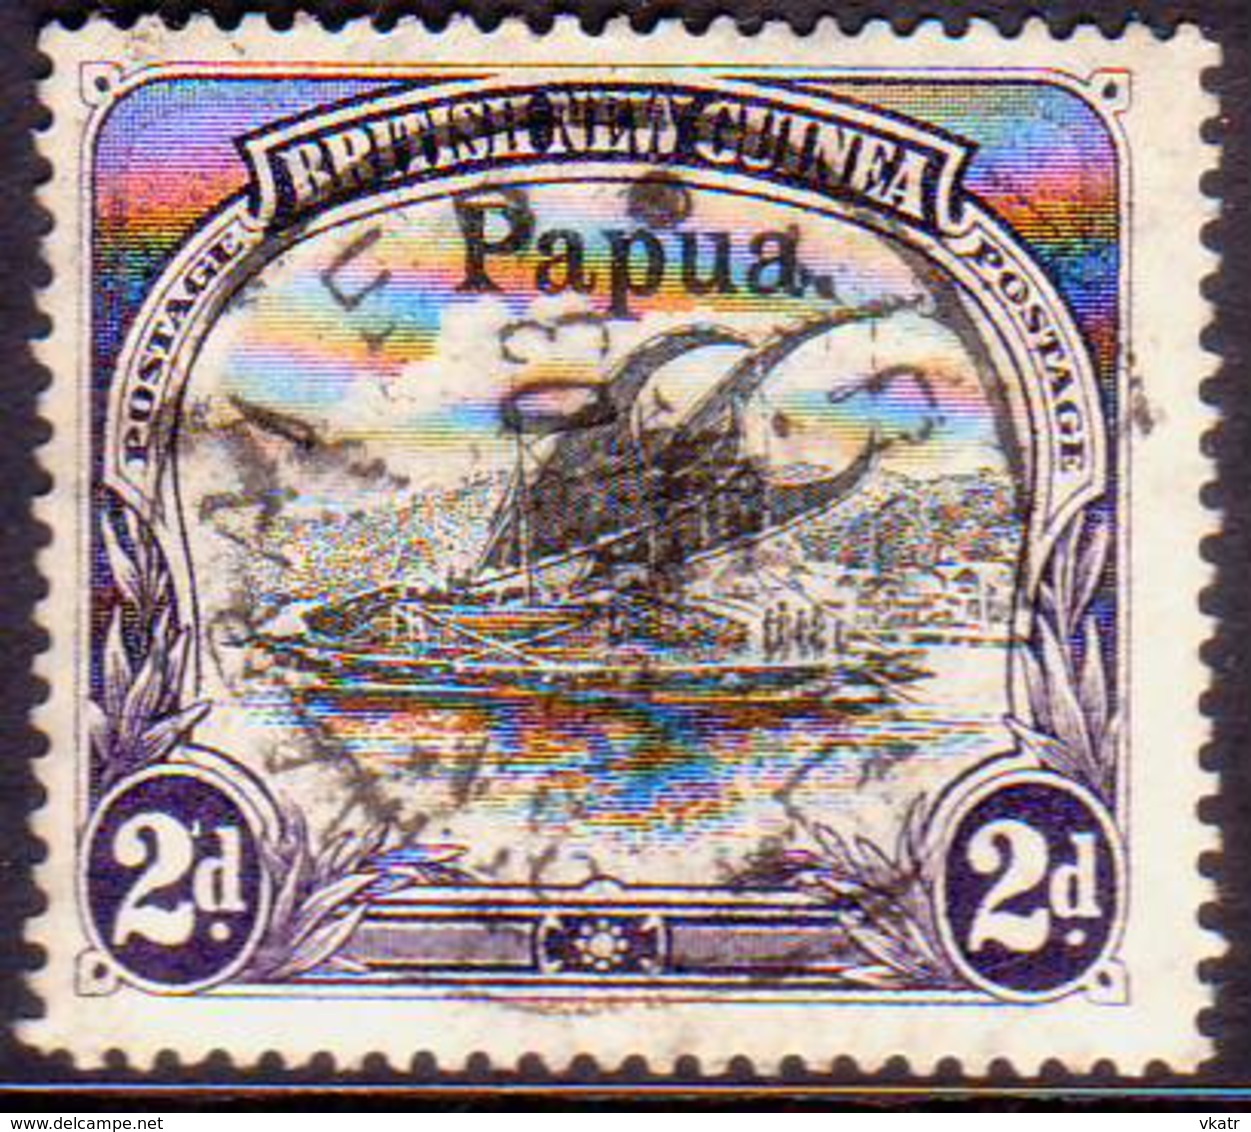 PAPUA (BRITISH NEW GUINEA) 1906 SG #23 2d Used Wmk Vertical Large Opt CV £5 - Papua New Guinea